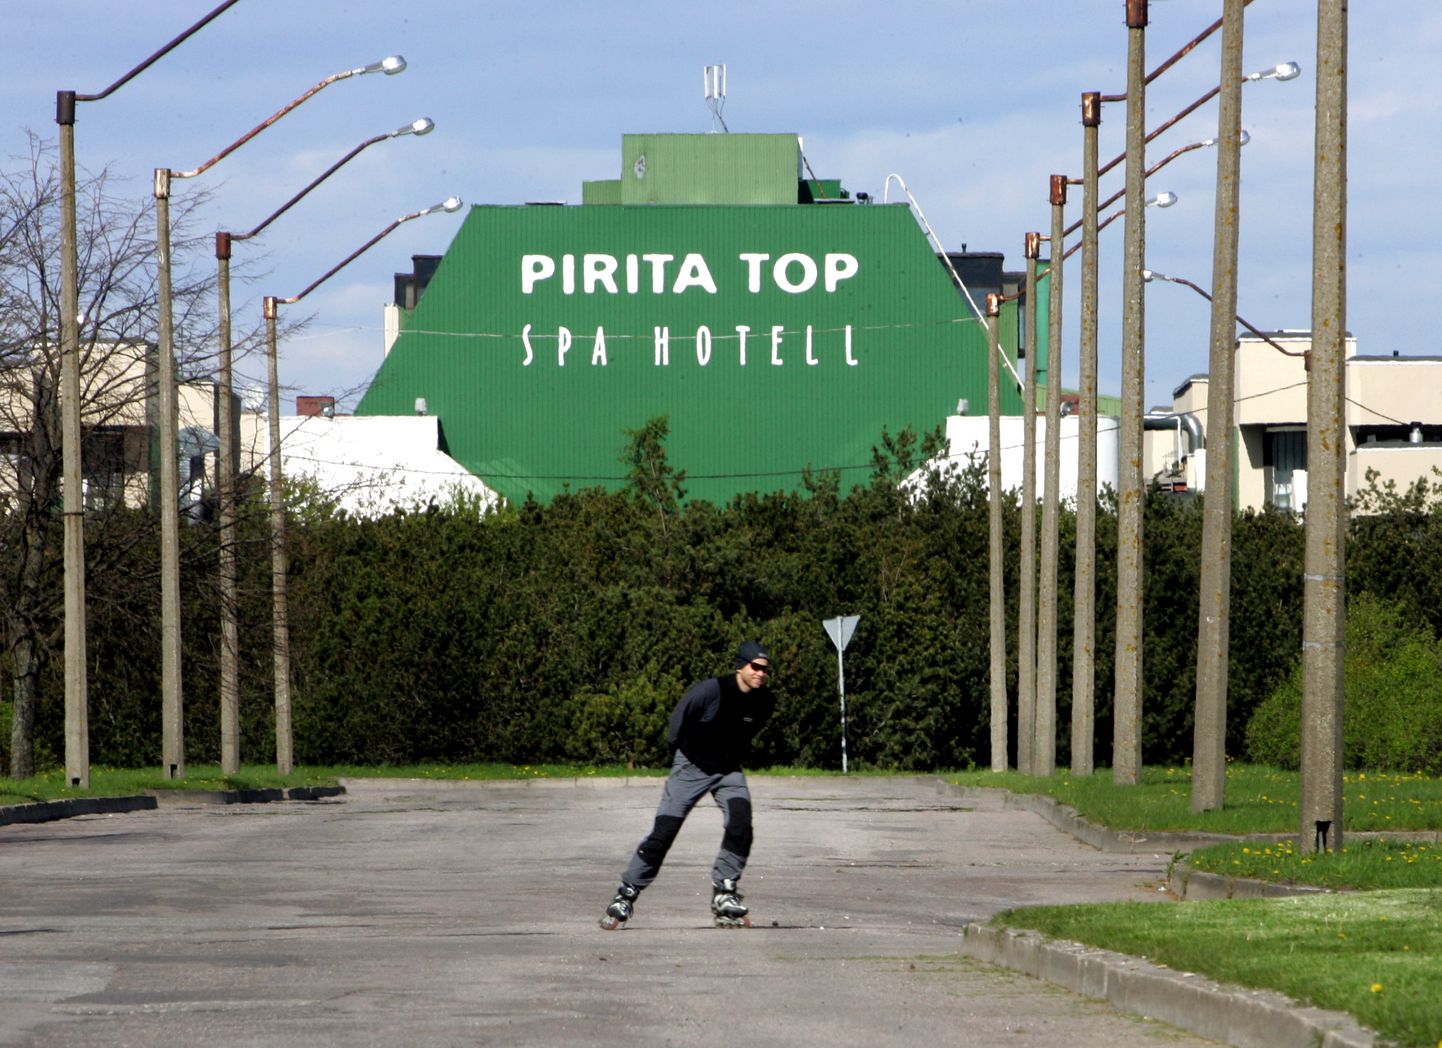 Pirita TOP Spa hotell.